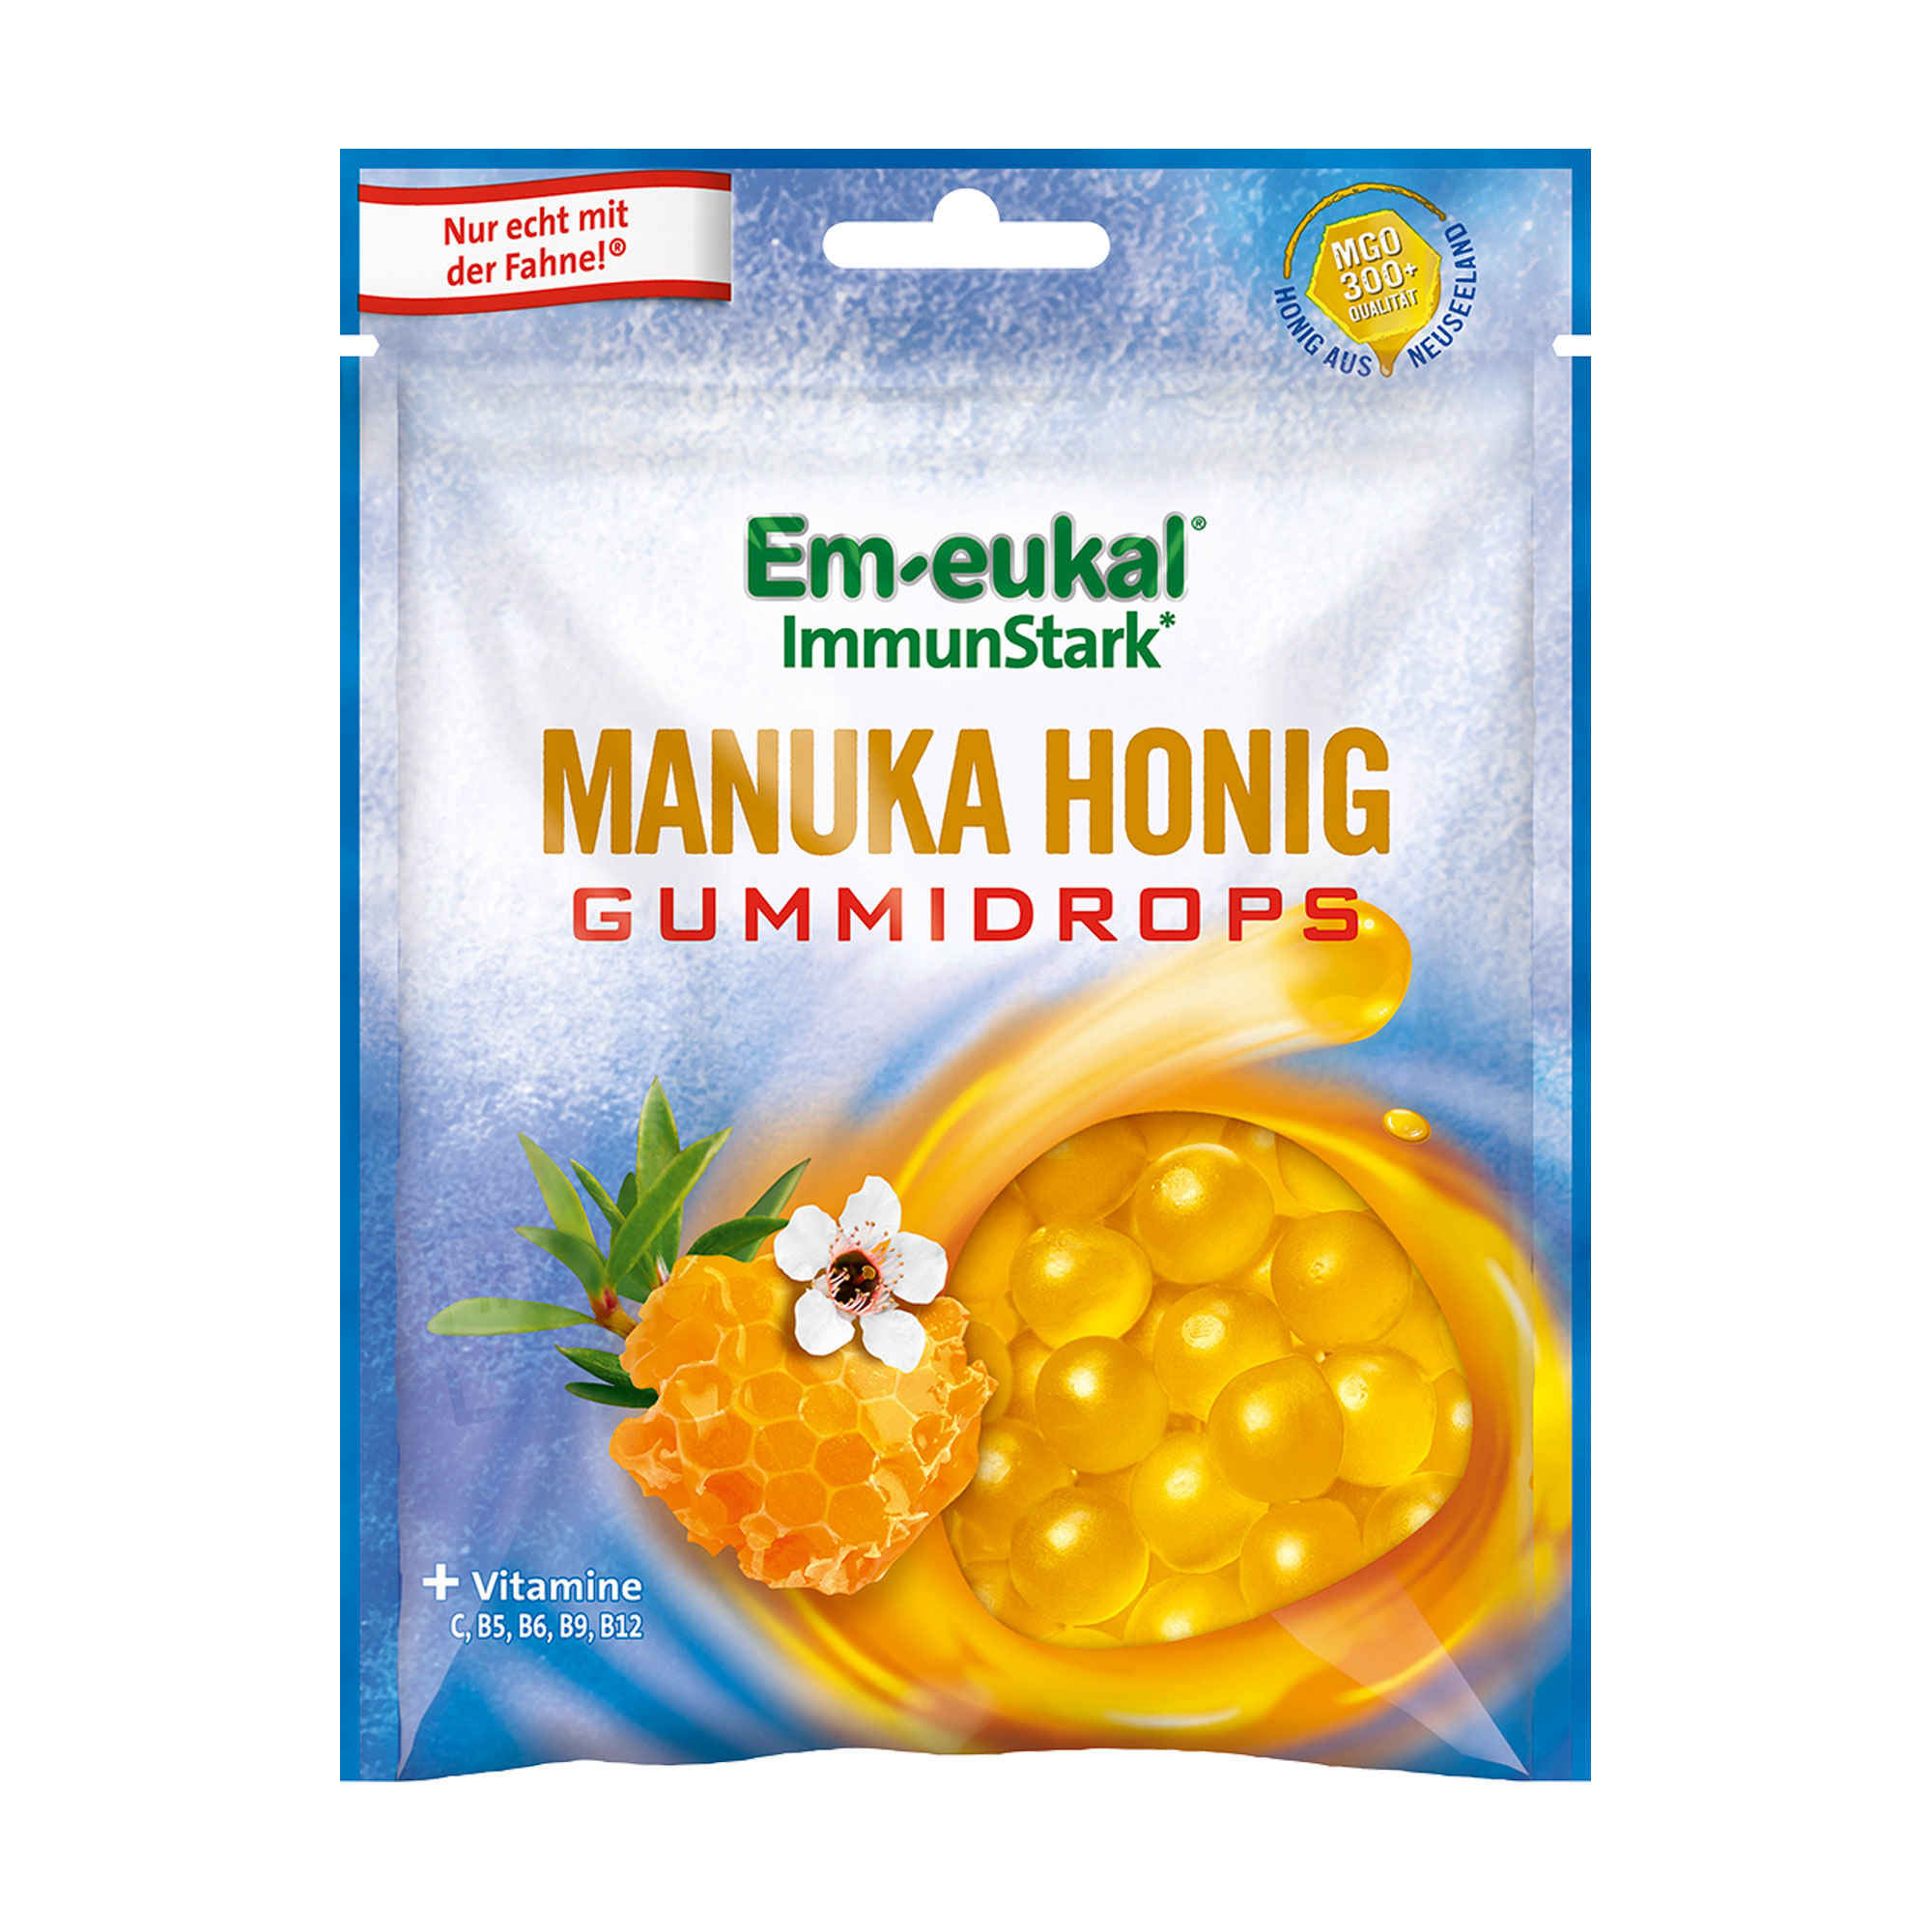 Zuckerhaltige Manuka-Honig Gummibonbons mit Vitaminen.